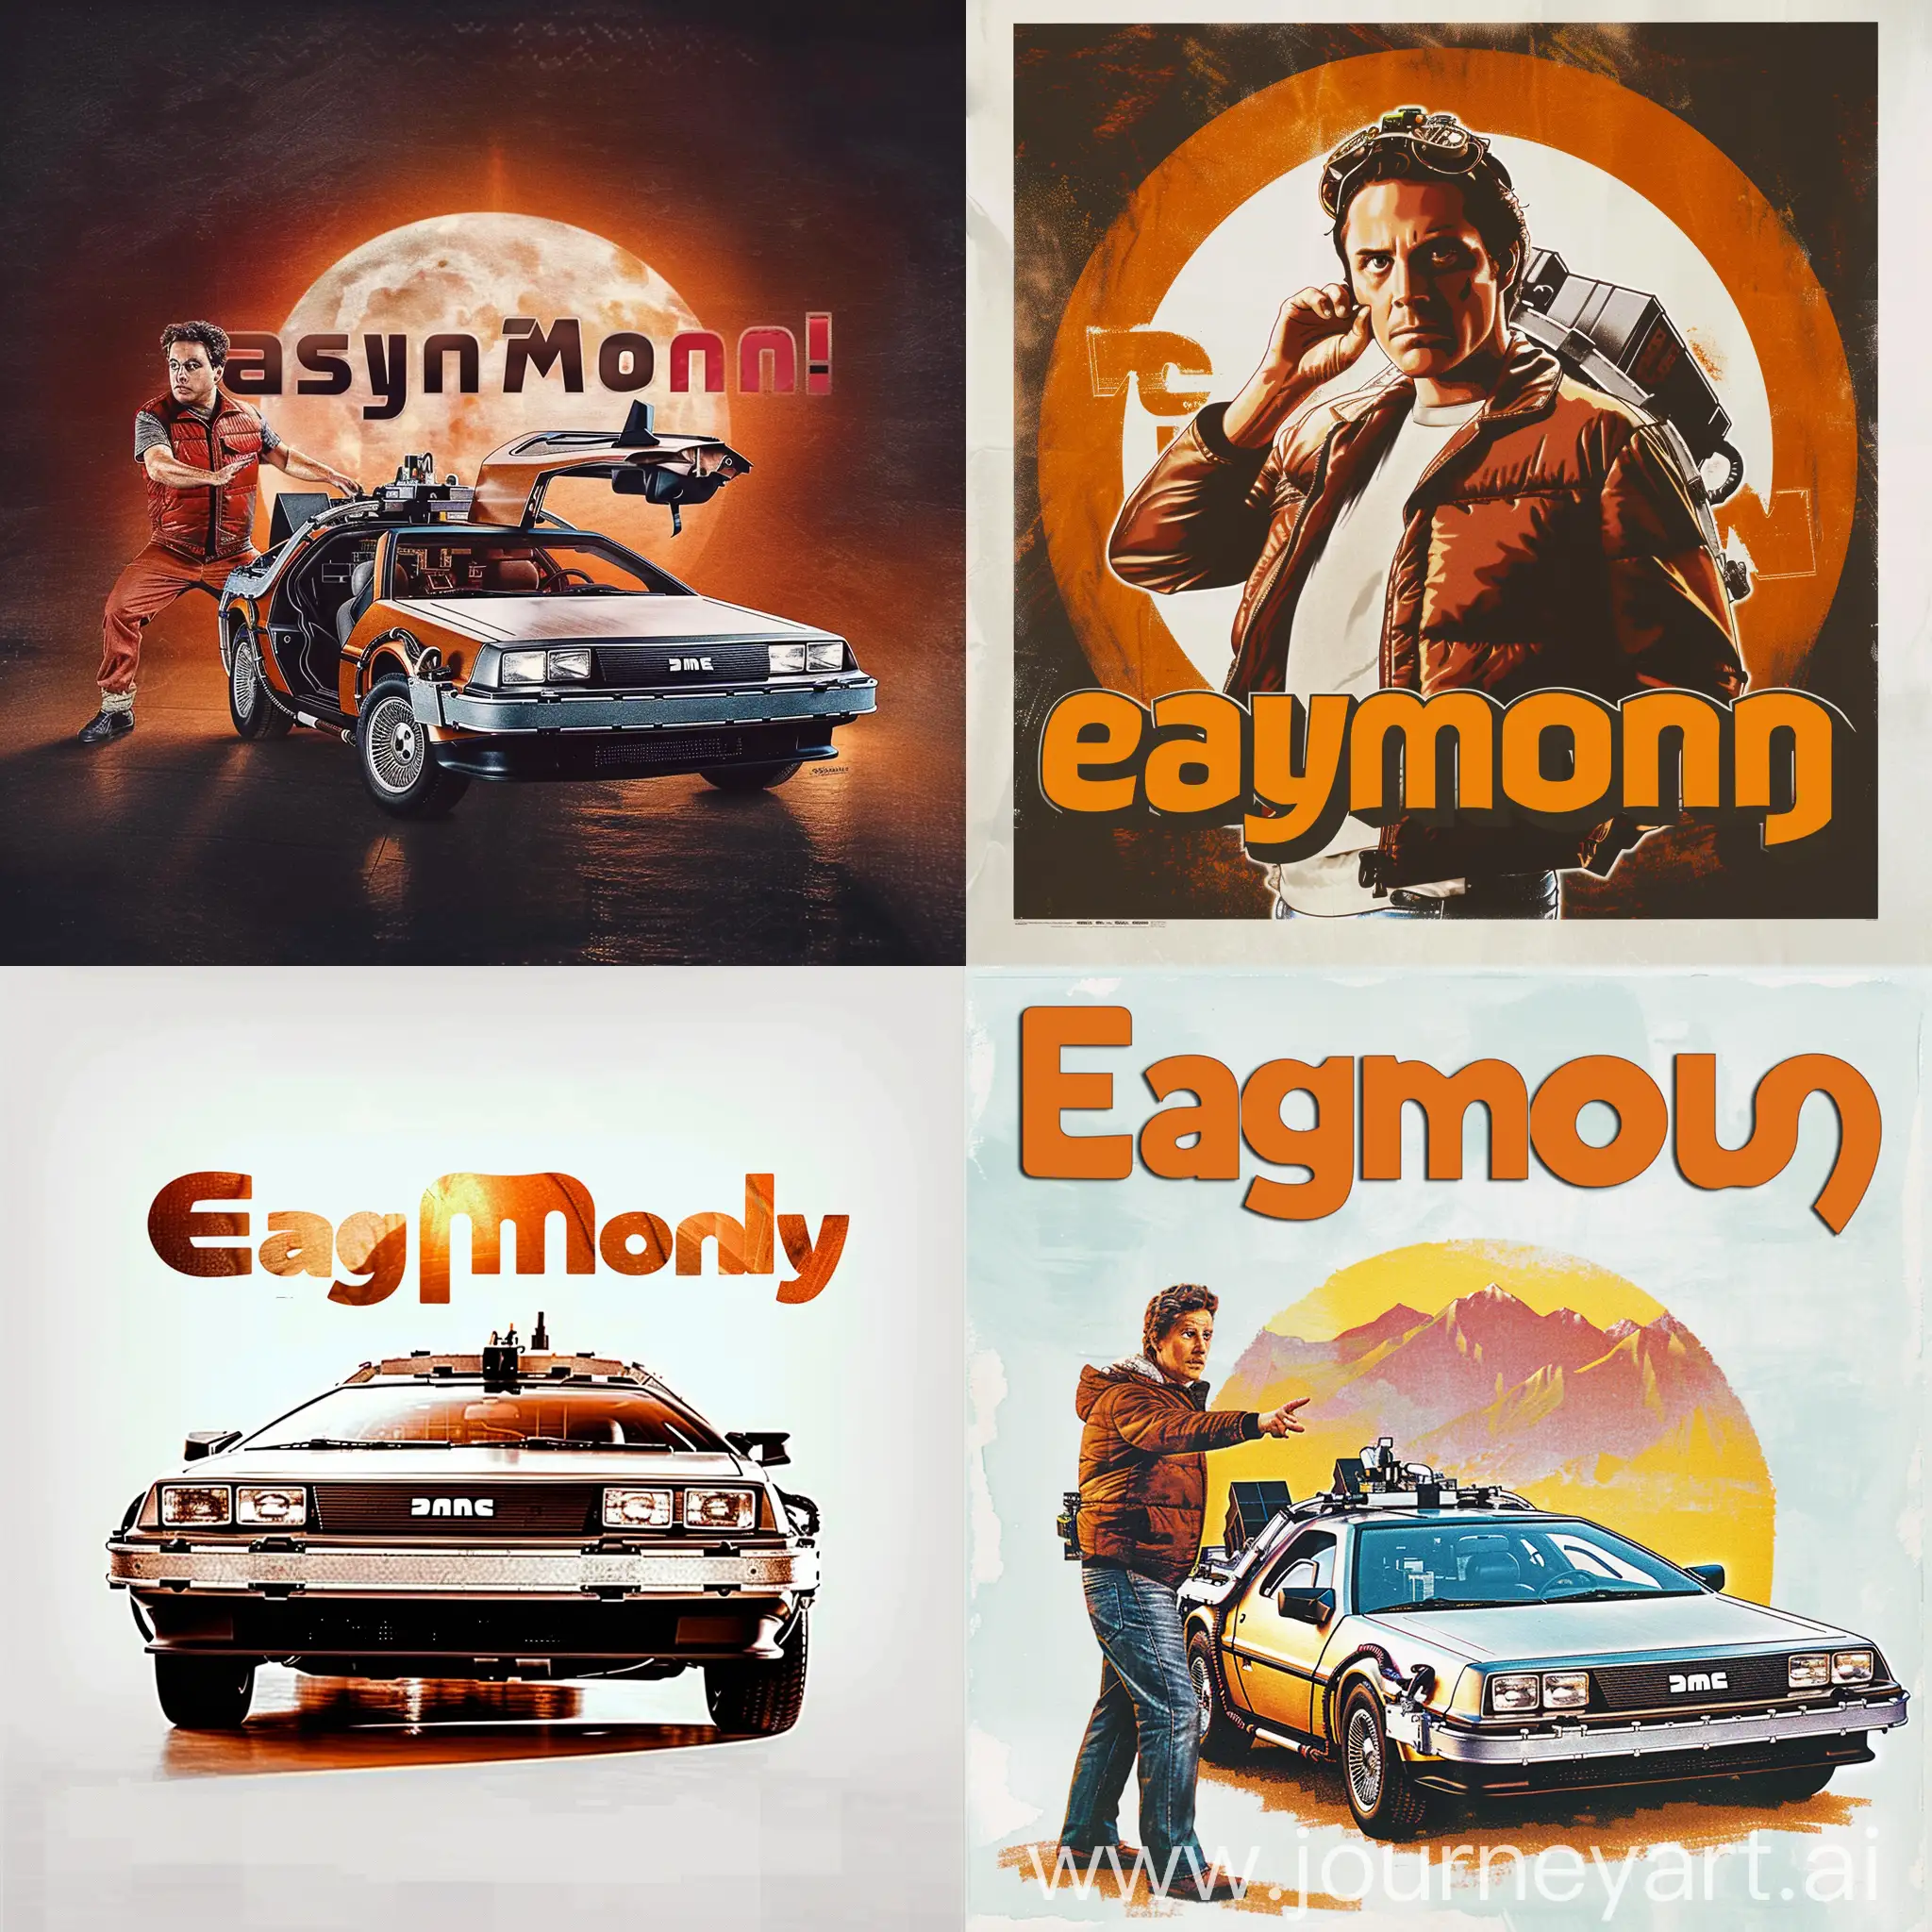 напиши логотип EasyMoney в стиле плаката "Назад в будущее"